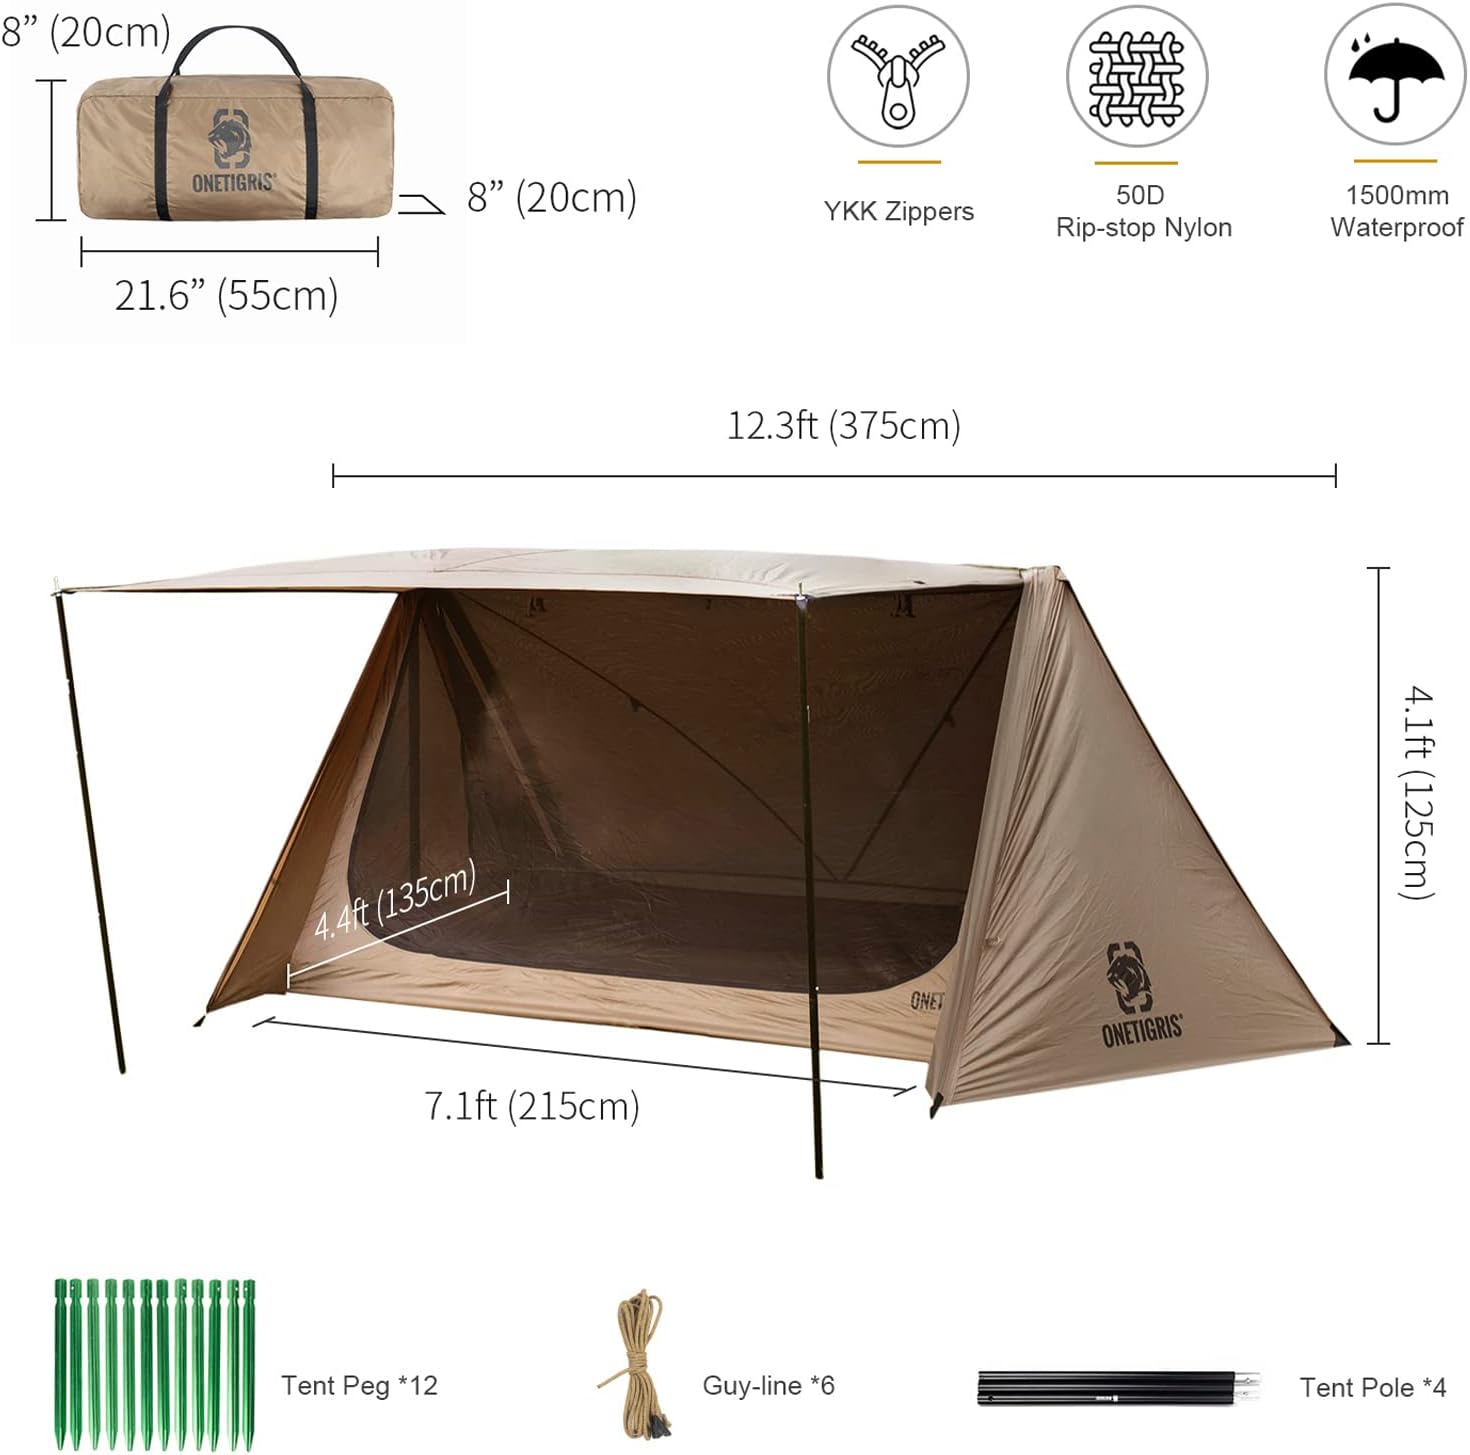 onetigris ridge tent brown nylon waterproof specs